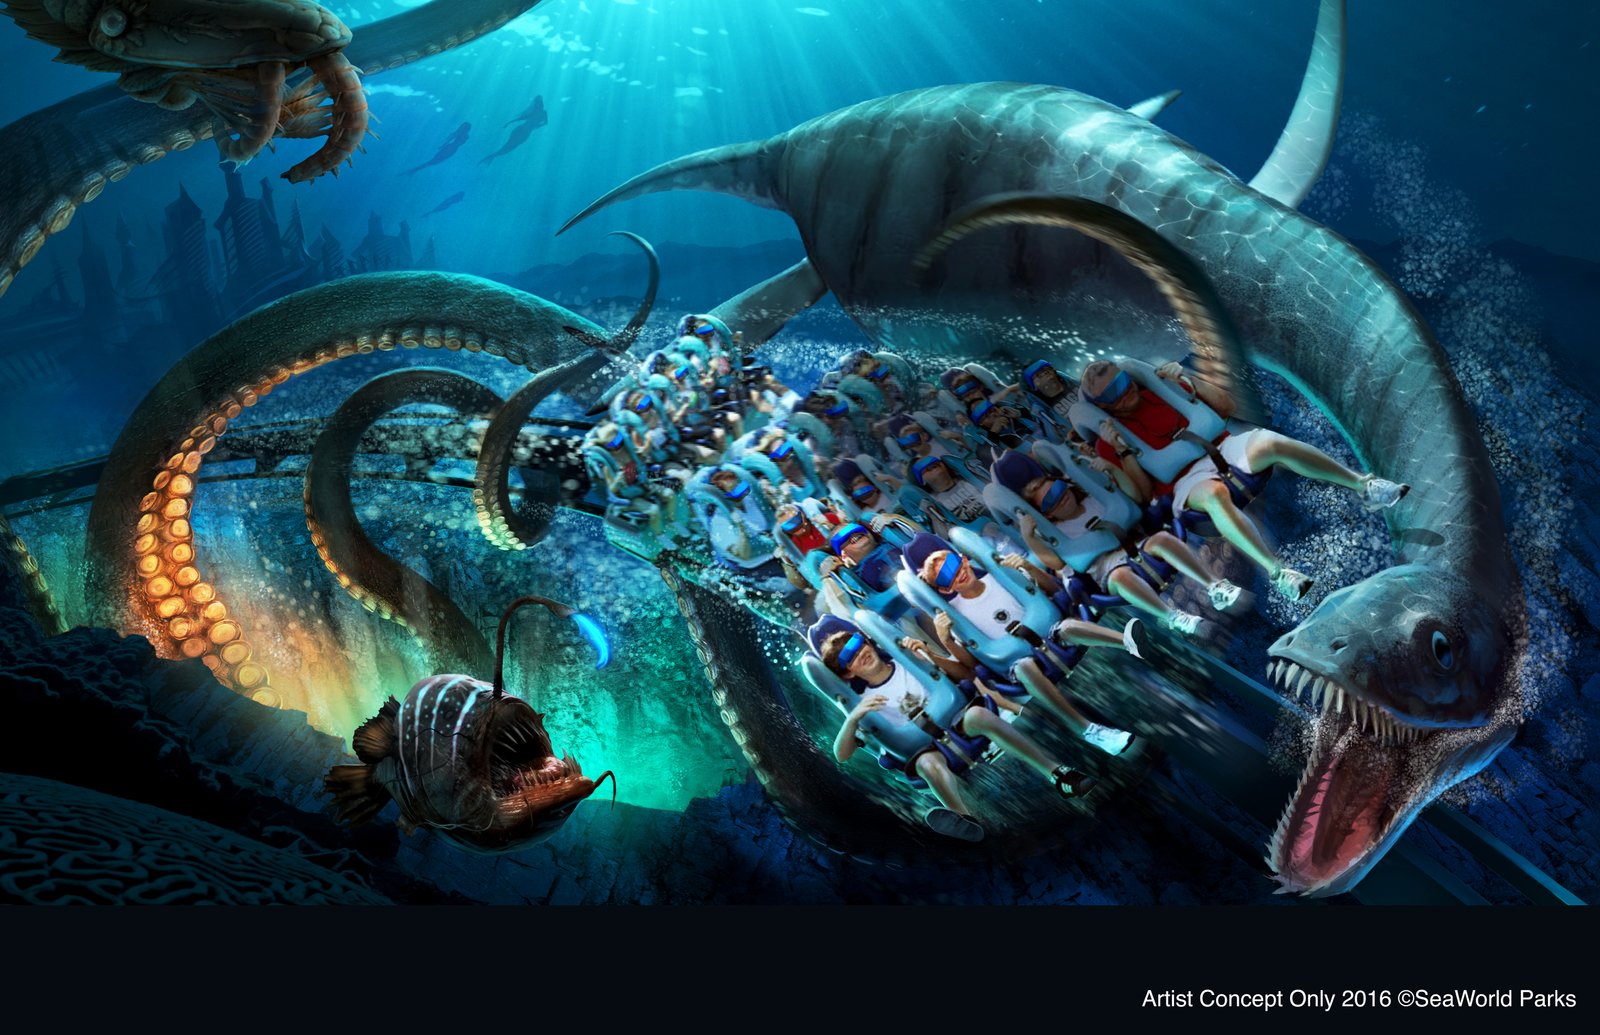 SeaWorld Orlandos new addition to the Kraken roller coaster VR